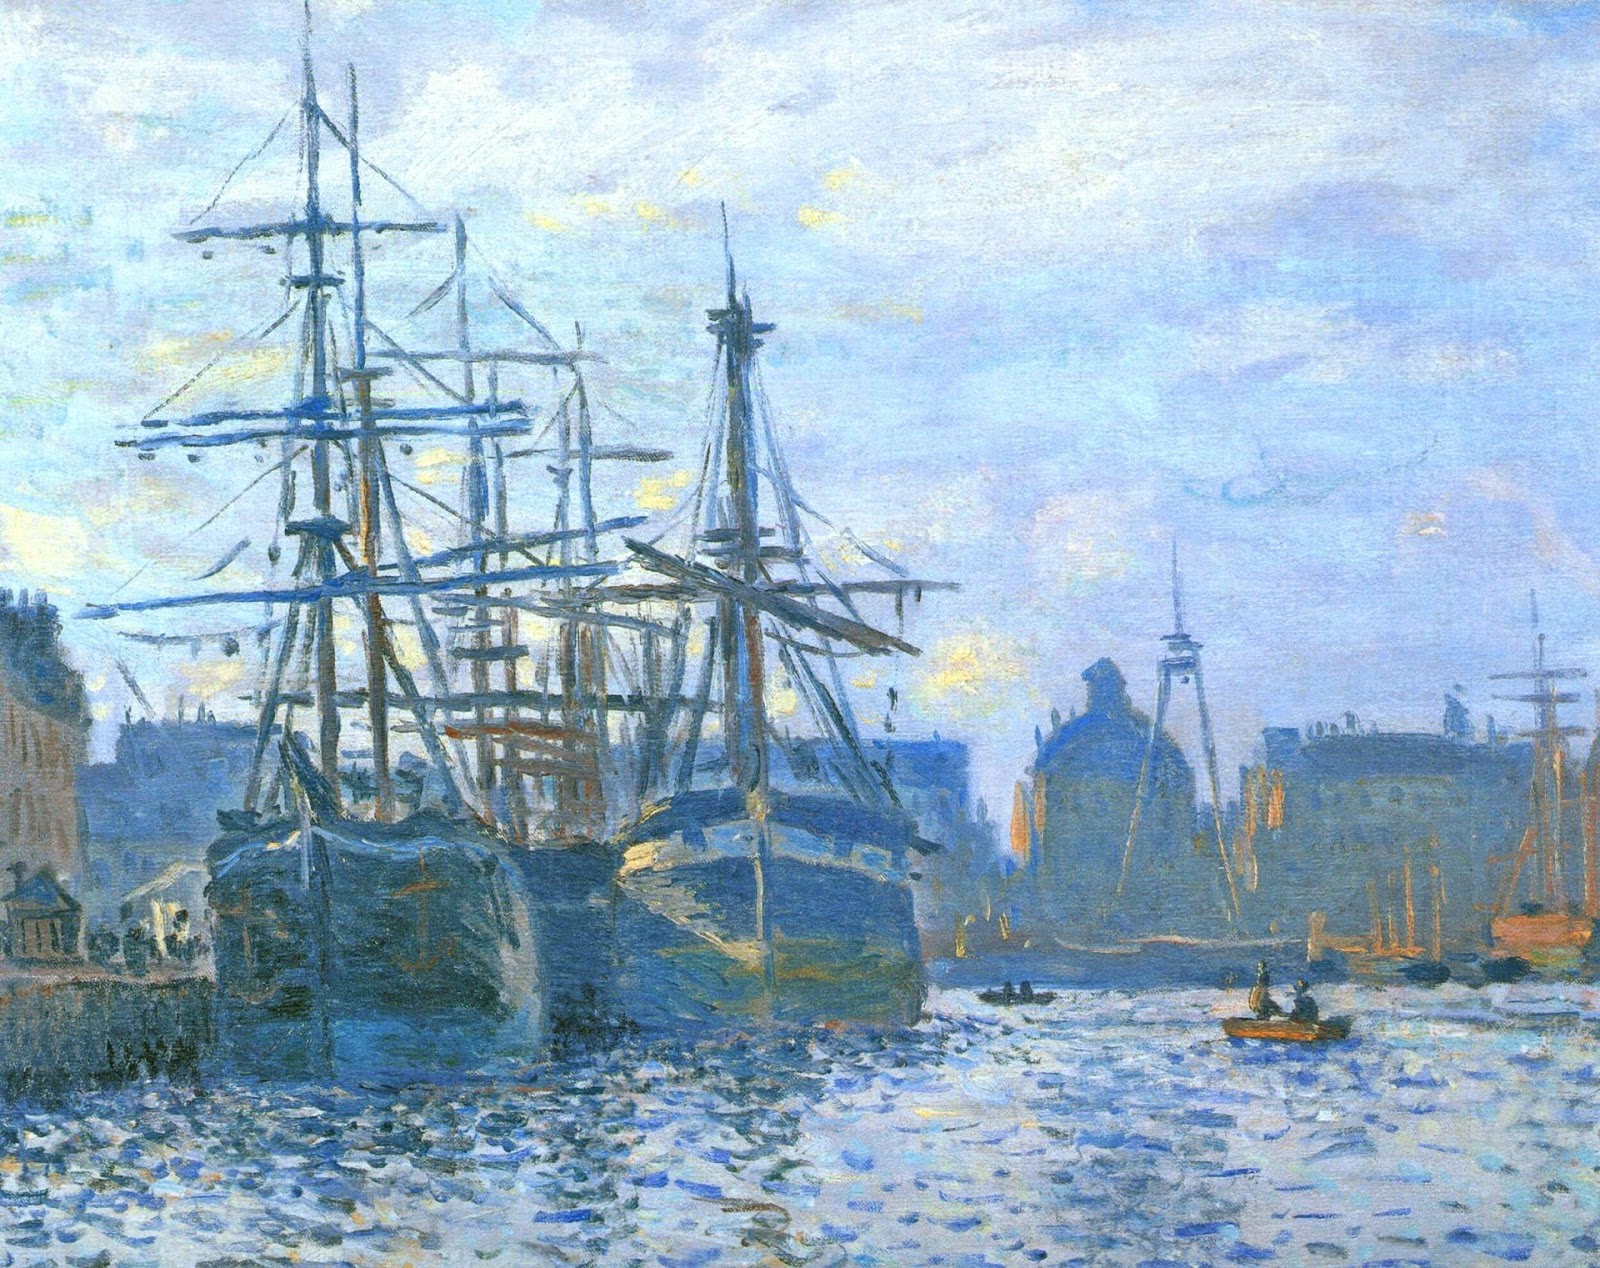 Claude+Monet-1840-1926 (572).jpg